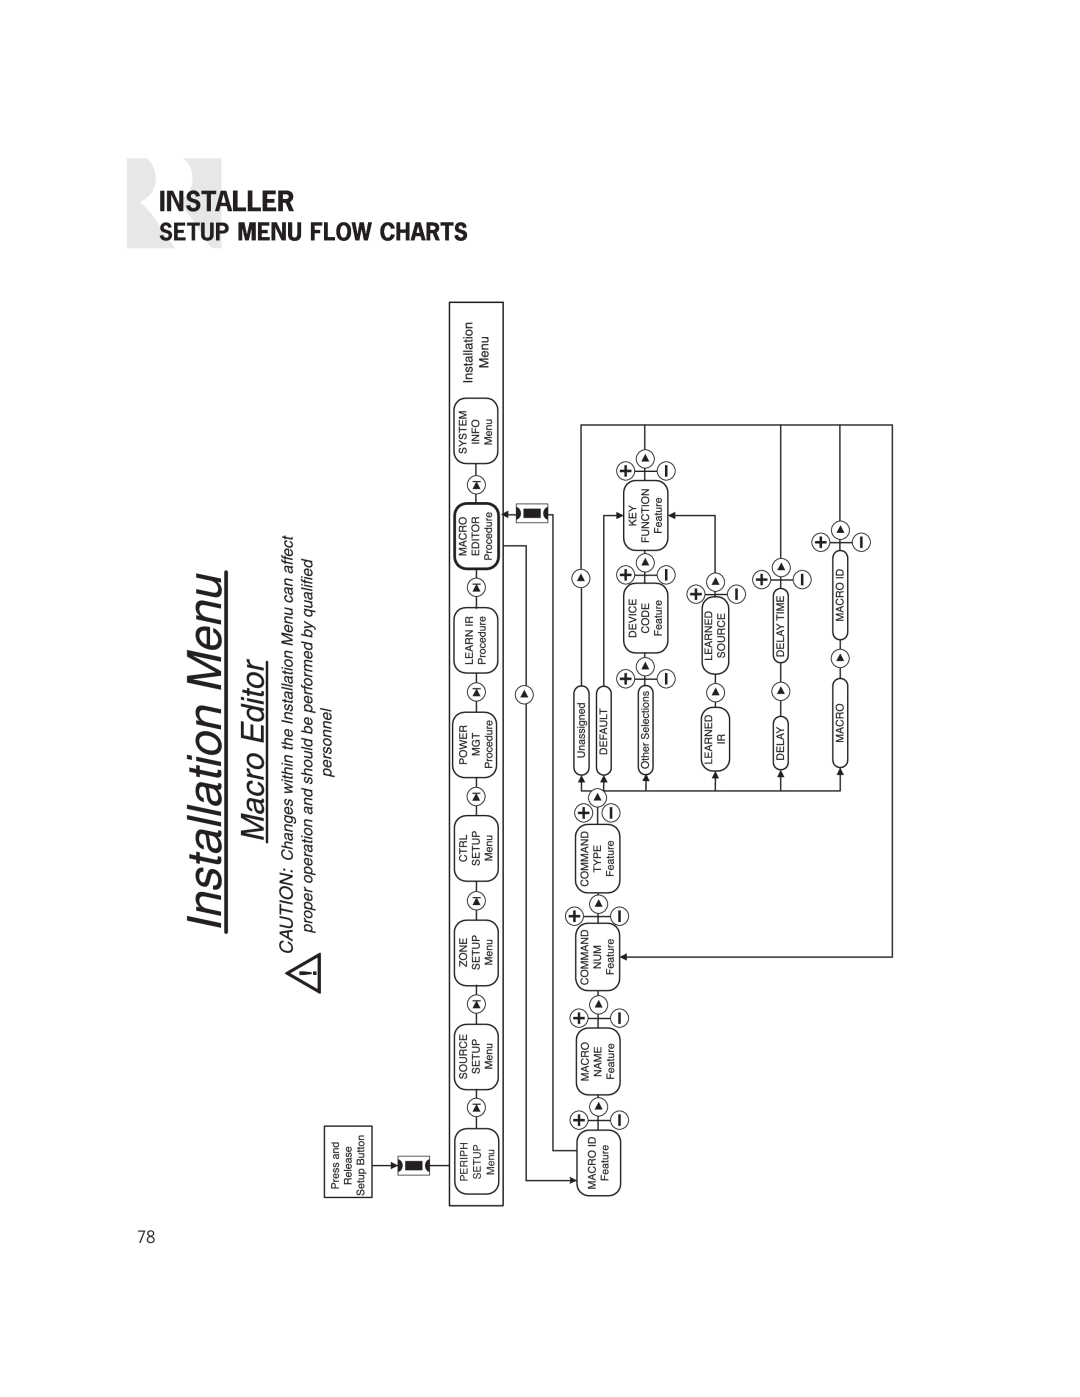 Russound CAM6.6X-S1/S2 instruction manual Installer, Setup Menu Flow Charts 